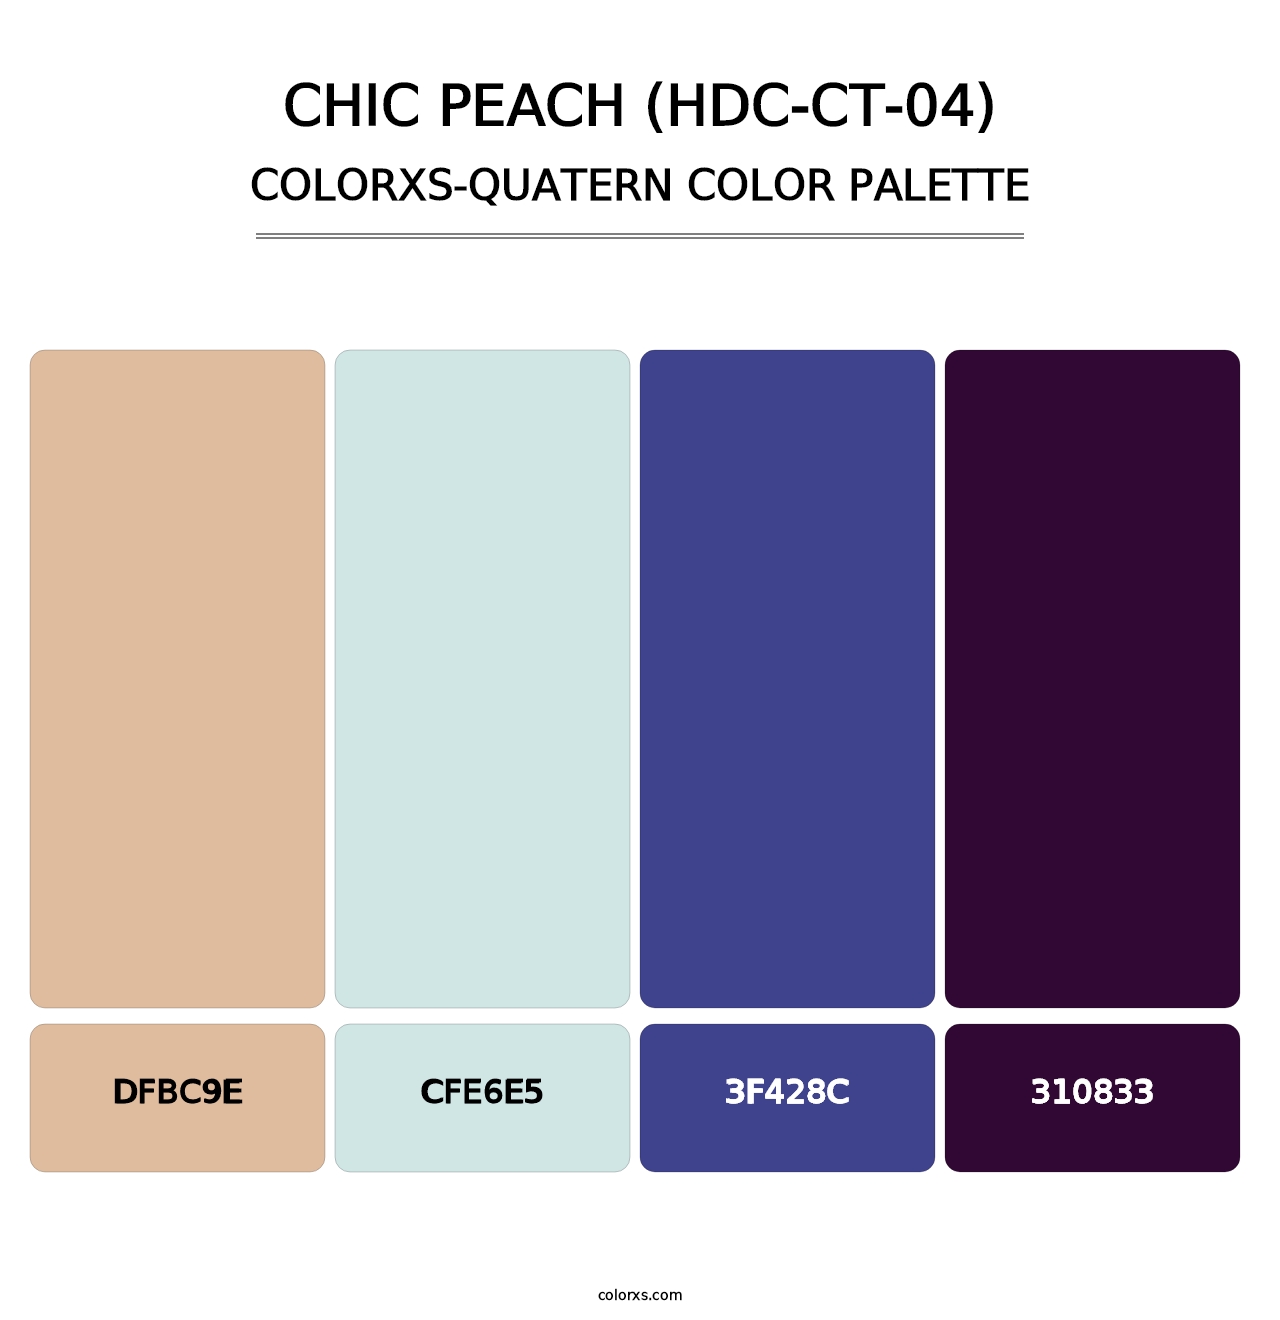 Chic Peach (HDC-CT-04) - Colorxs Quatern Palette